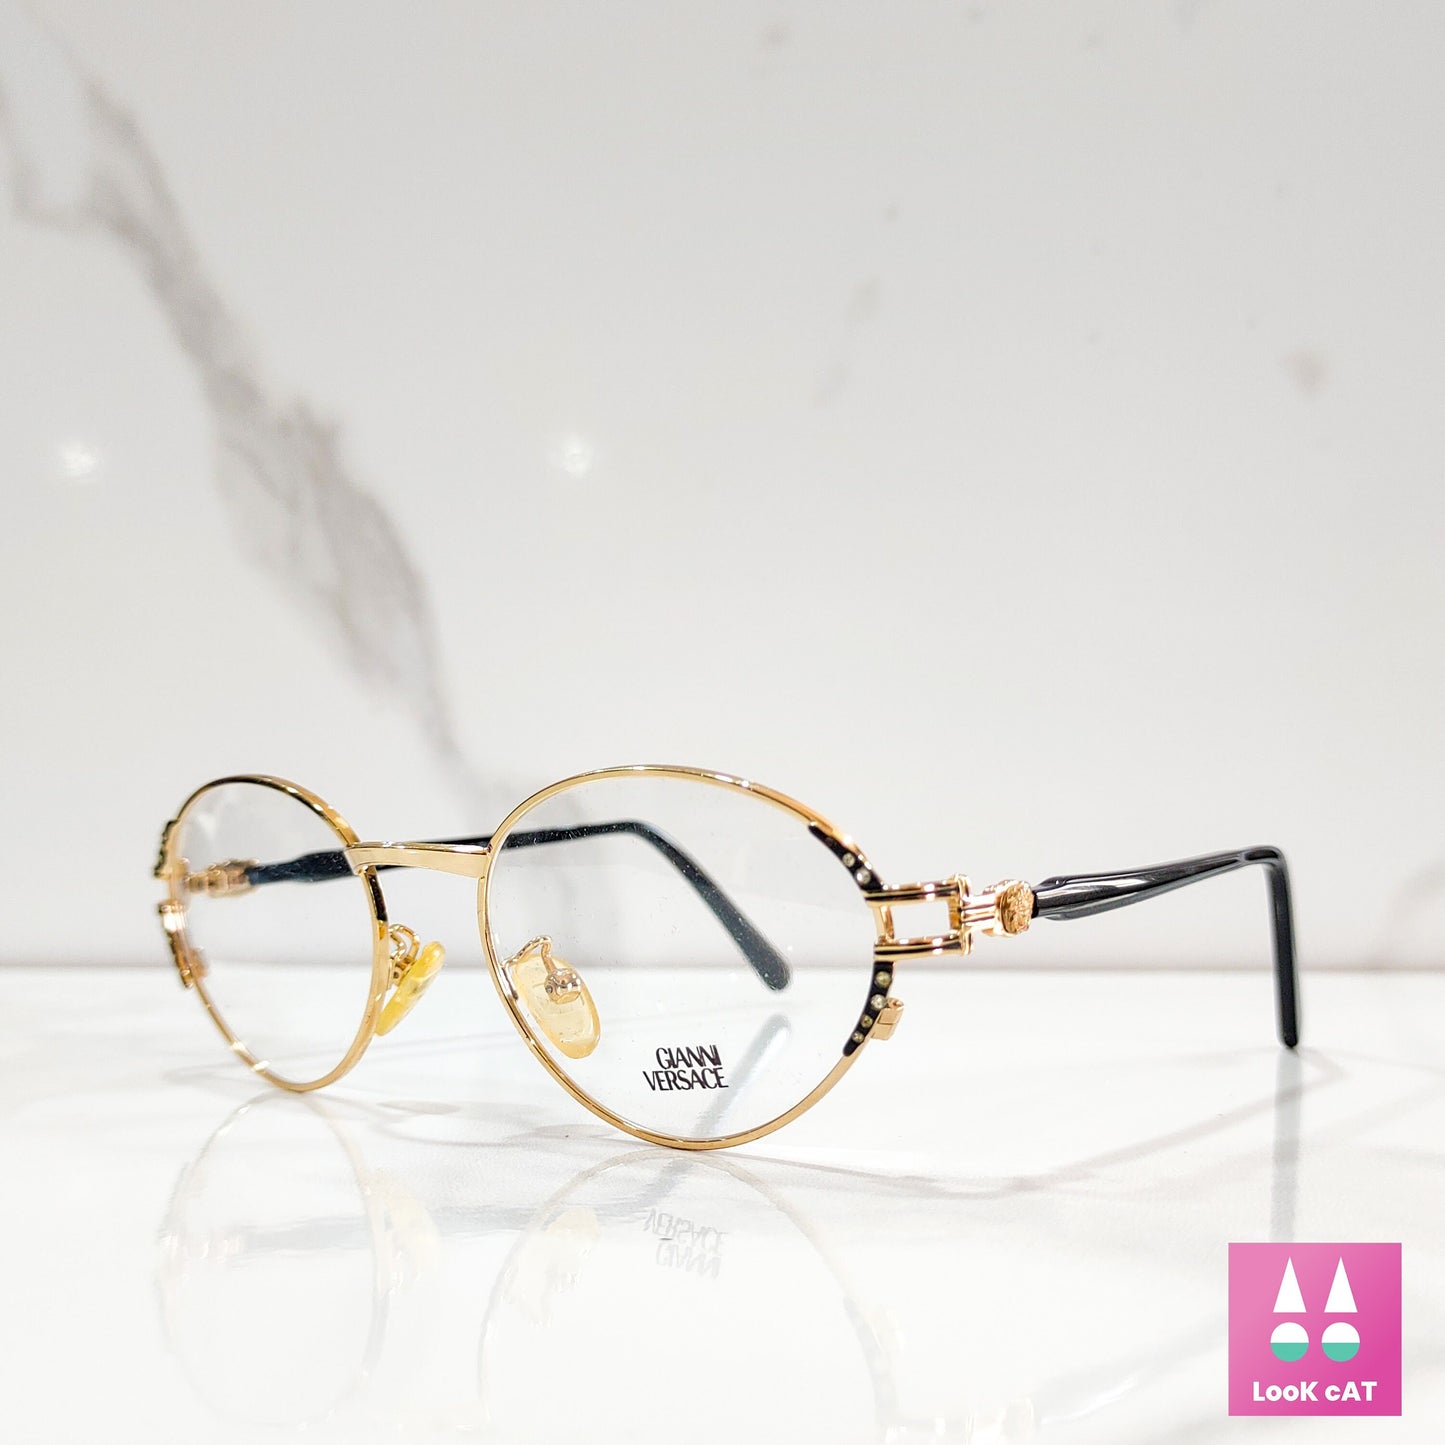 Versace G 53 occhiali da vista vintage avvolgenti occhiali gafas anni '90 y2k NOS